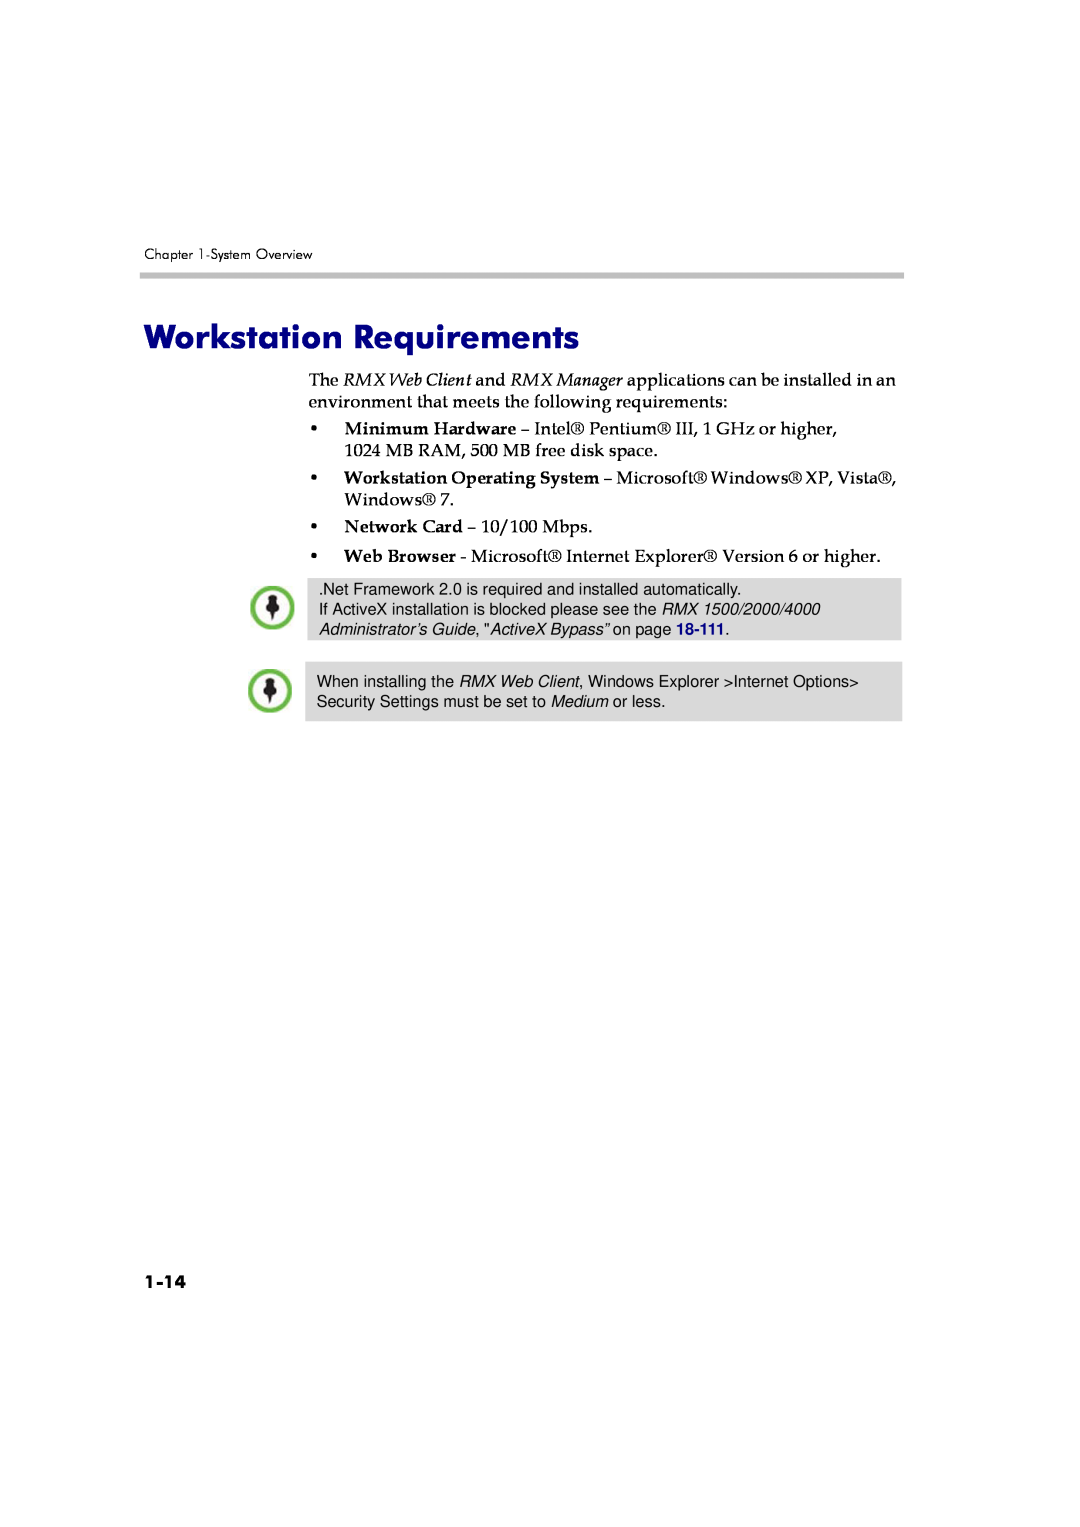 Polycom DOC2560A manual Workstation Requirements, 1-14 